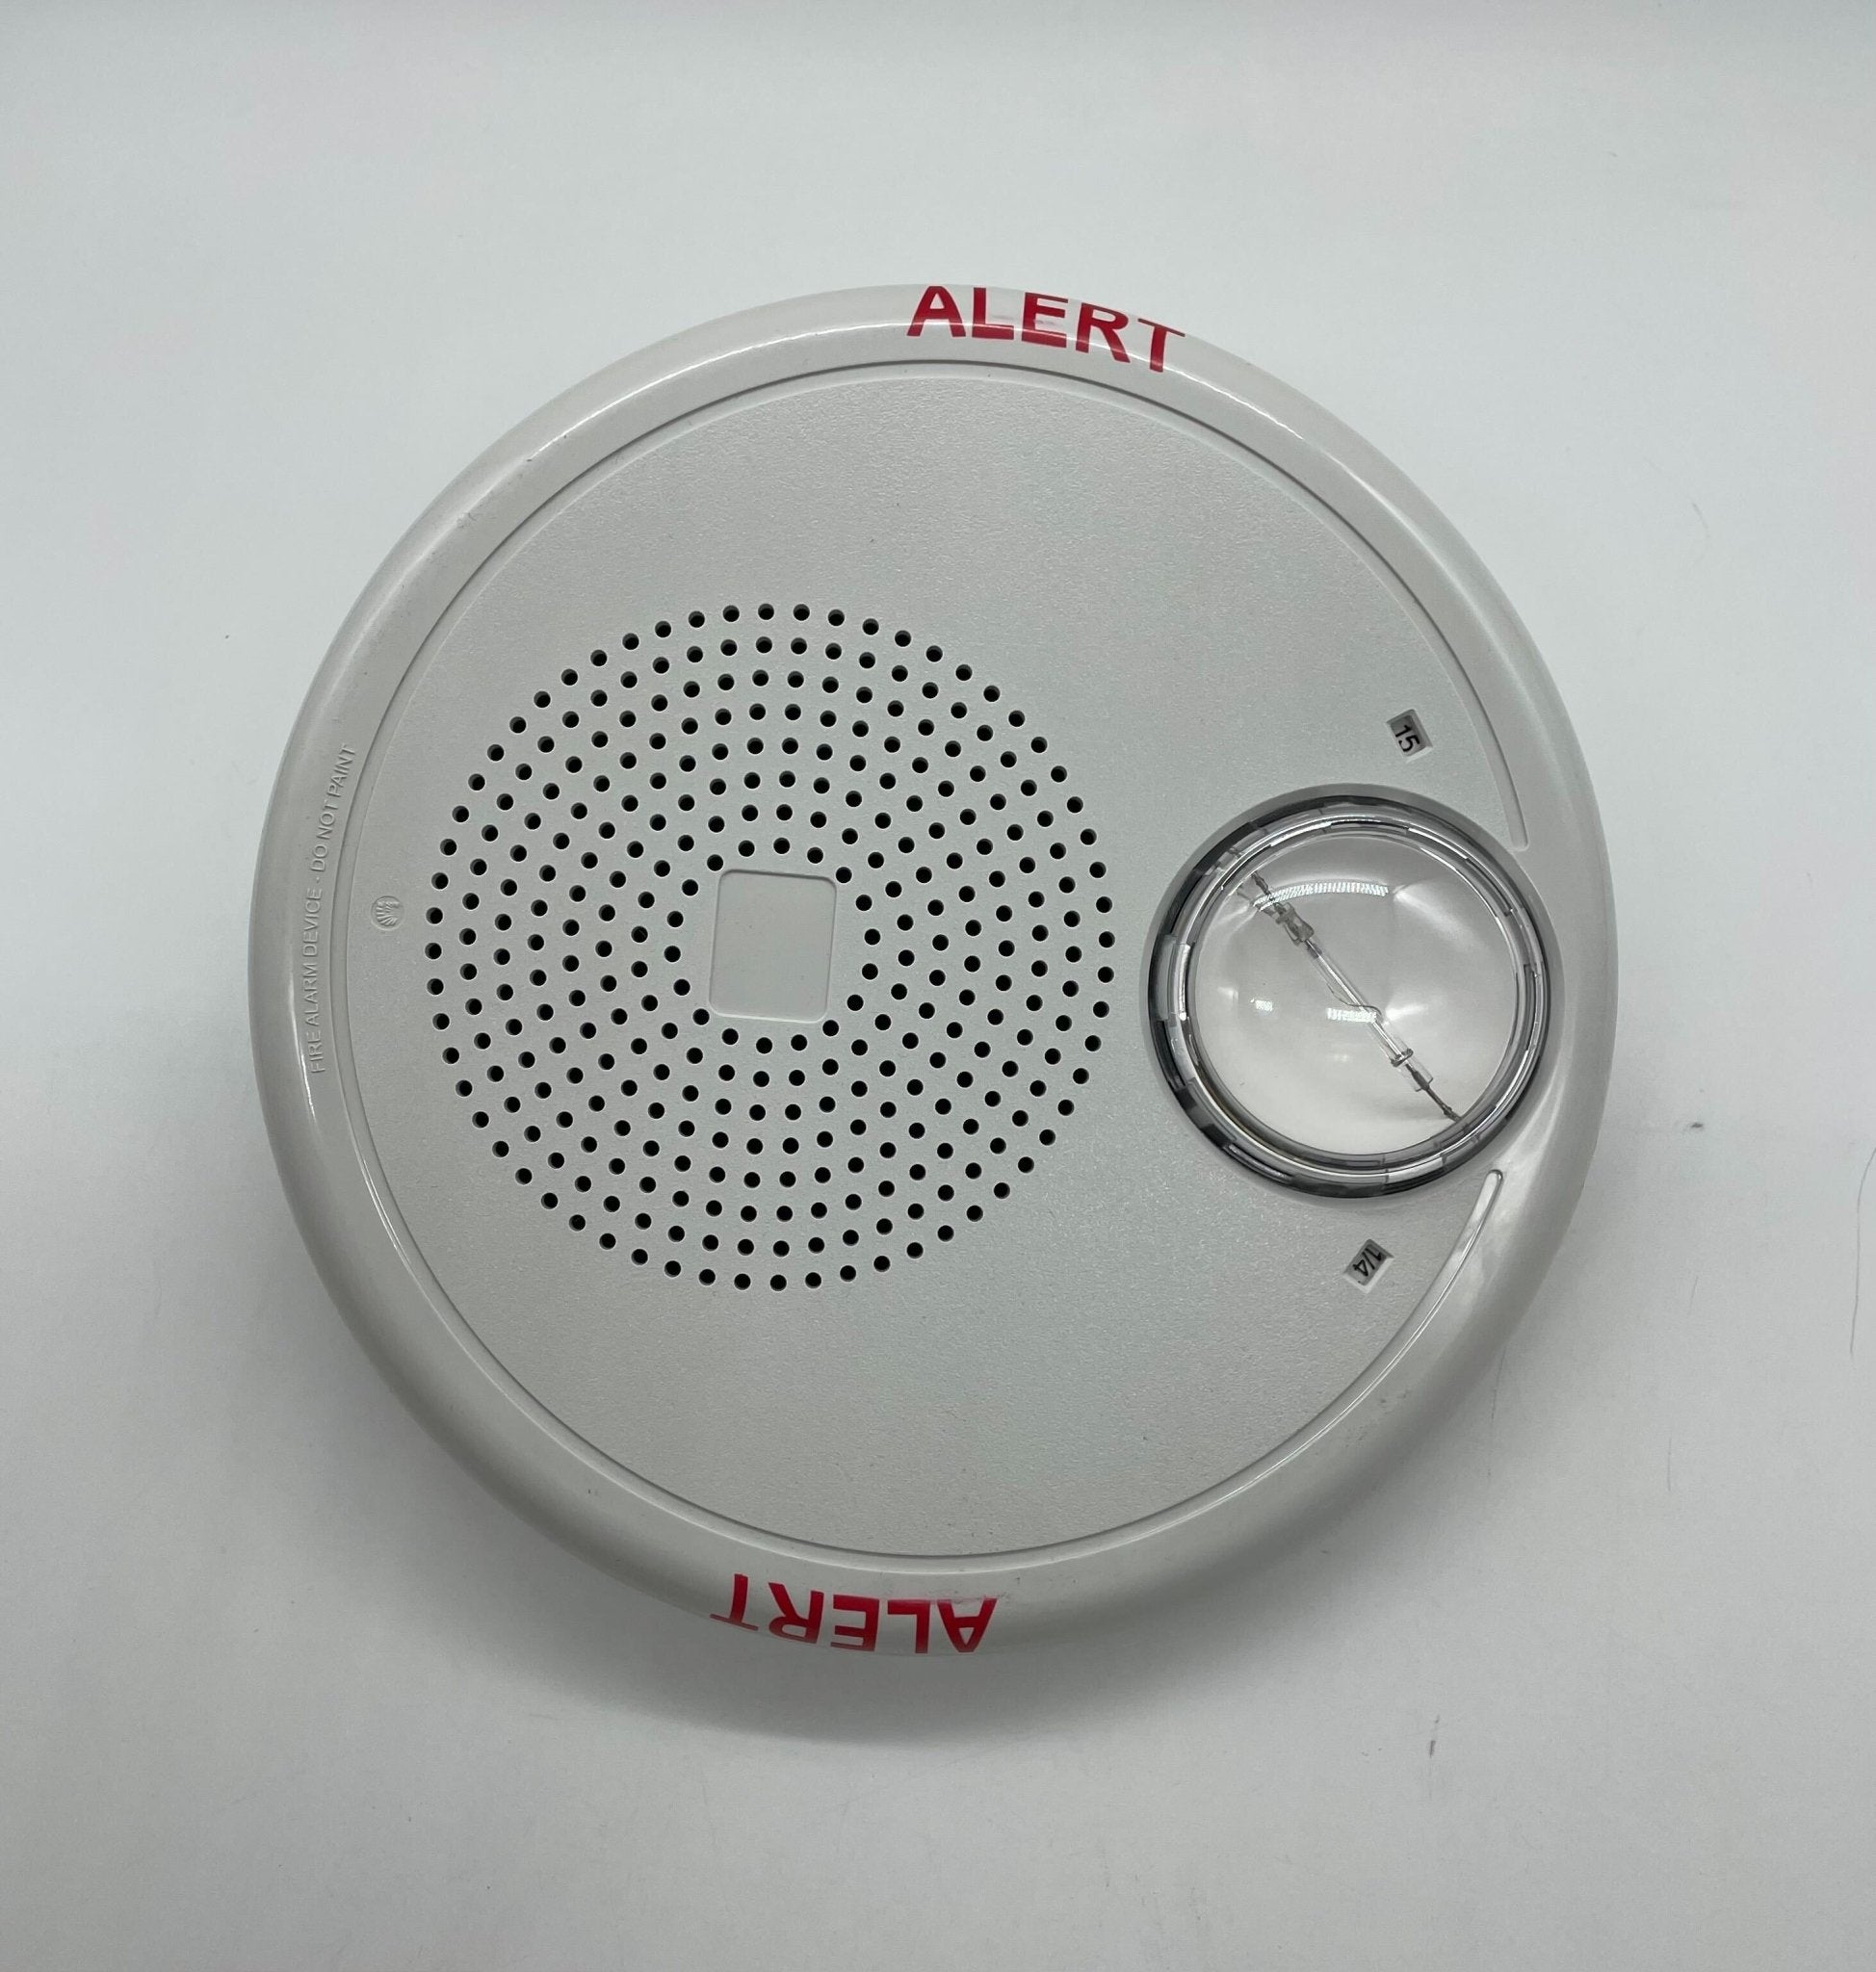 Edwards GCHFWA-S7VMC - The Fire Alarm Supplier